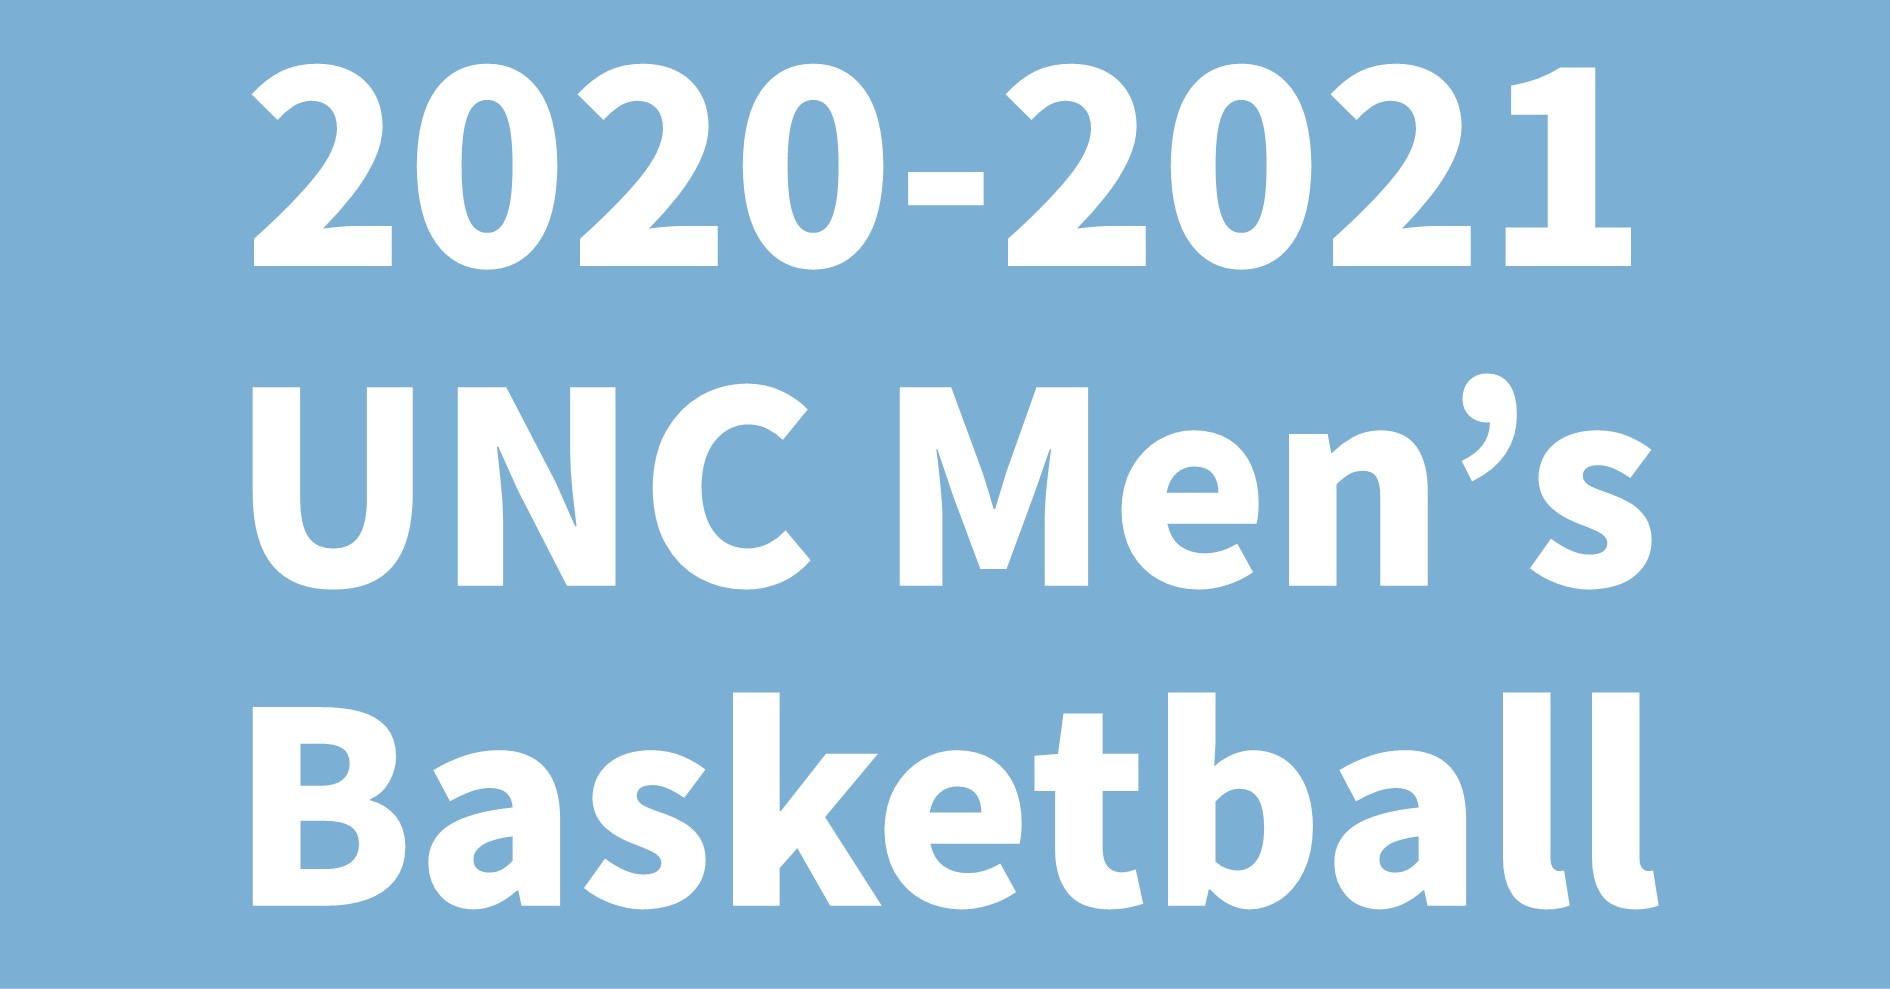 2020-2021 UNC Men's Basketball